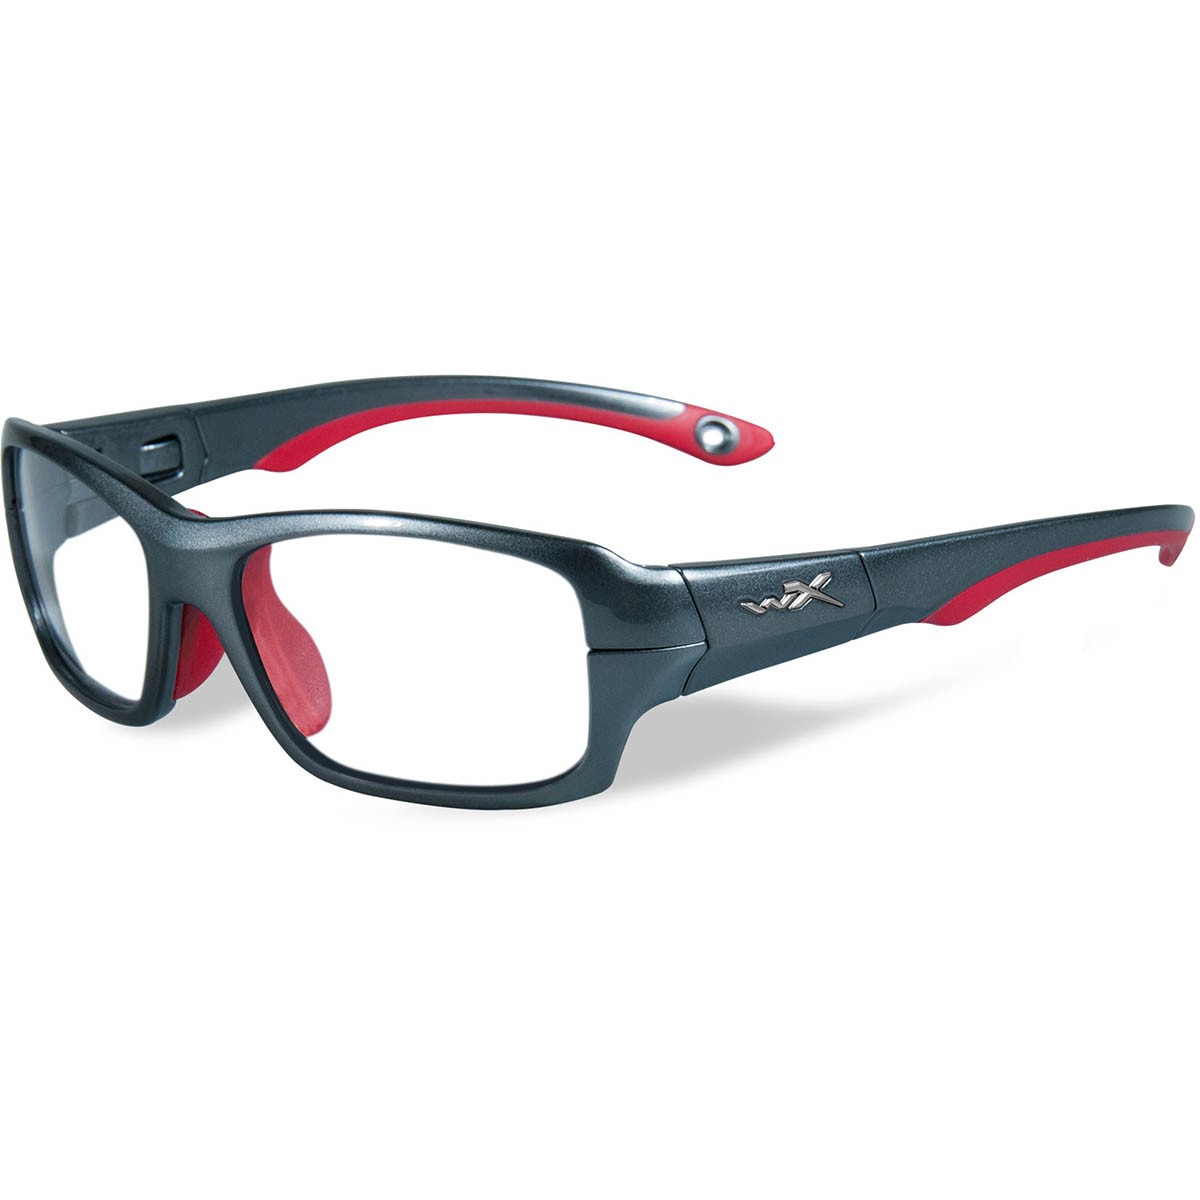 Очки Wiley-x z87. -025 Очки. Red Sport Glasses. Очки WILEYX спорт хит магазин.